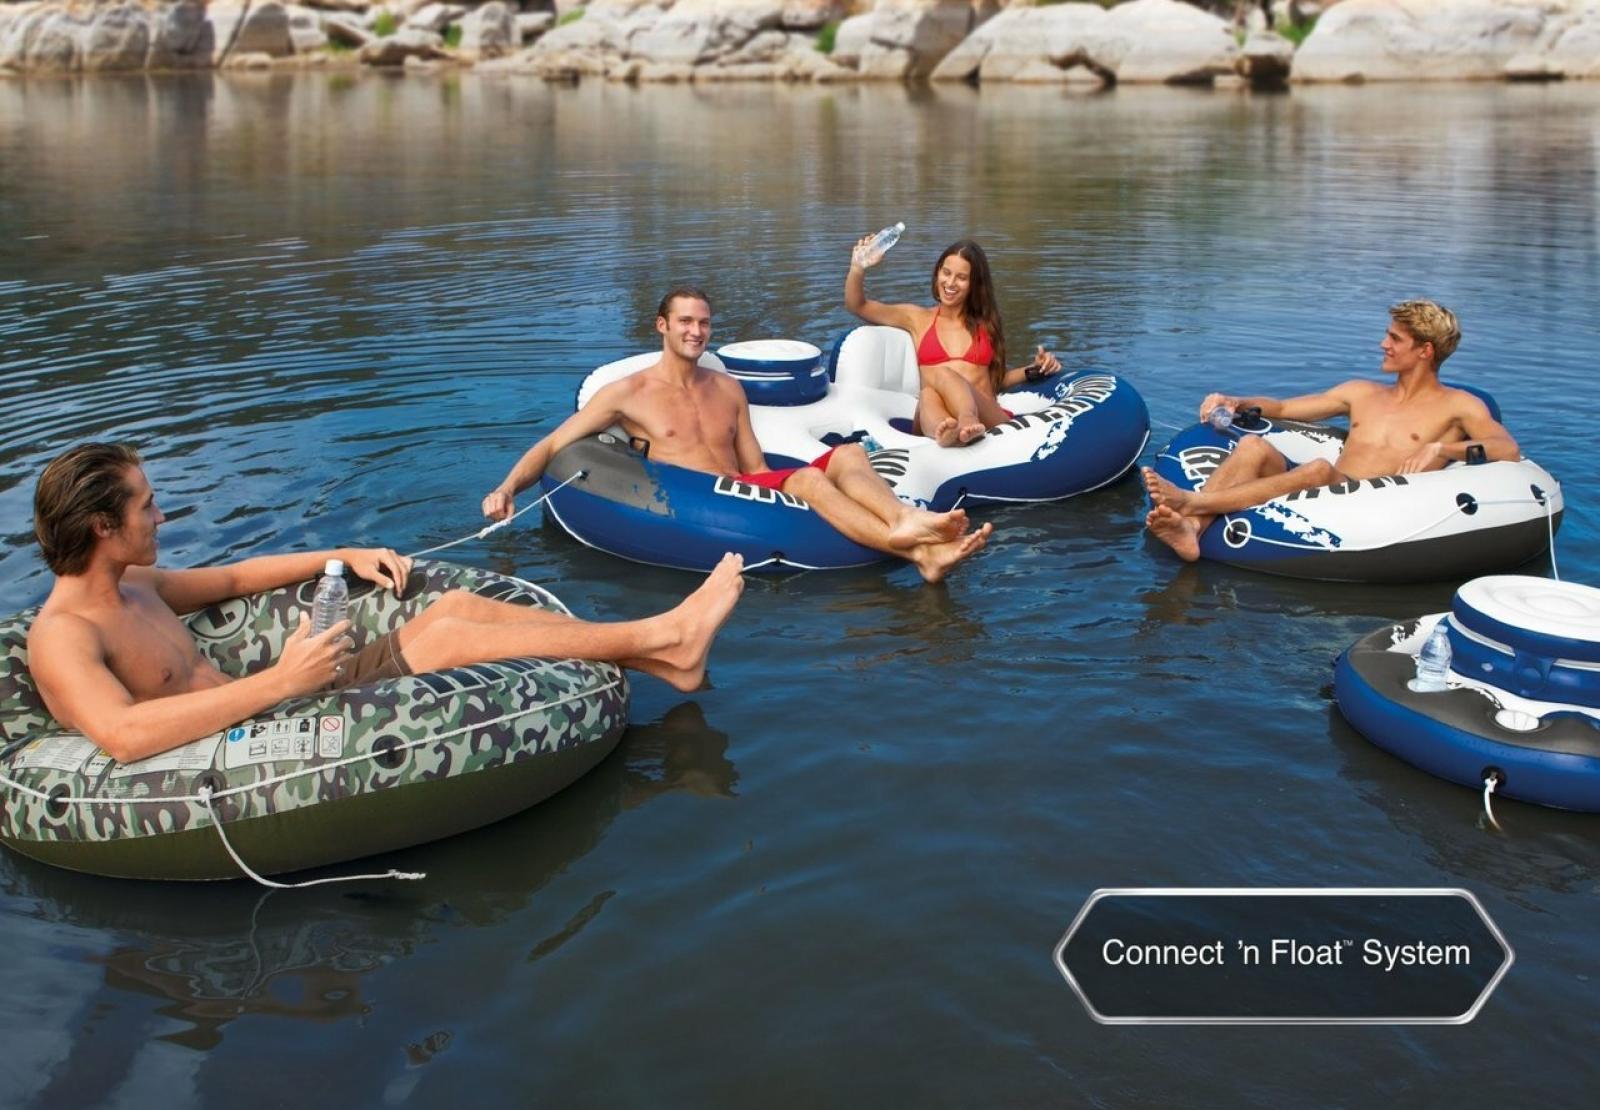 Intex River Run 2 Inflatable Floating Lake Tube